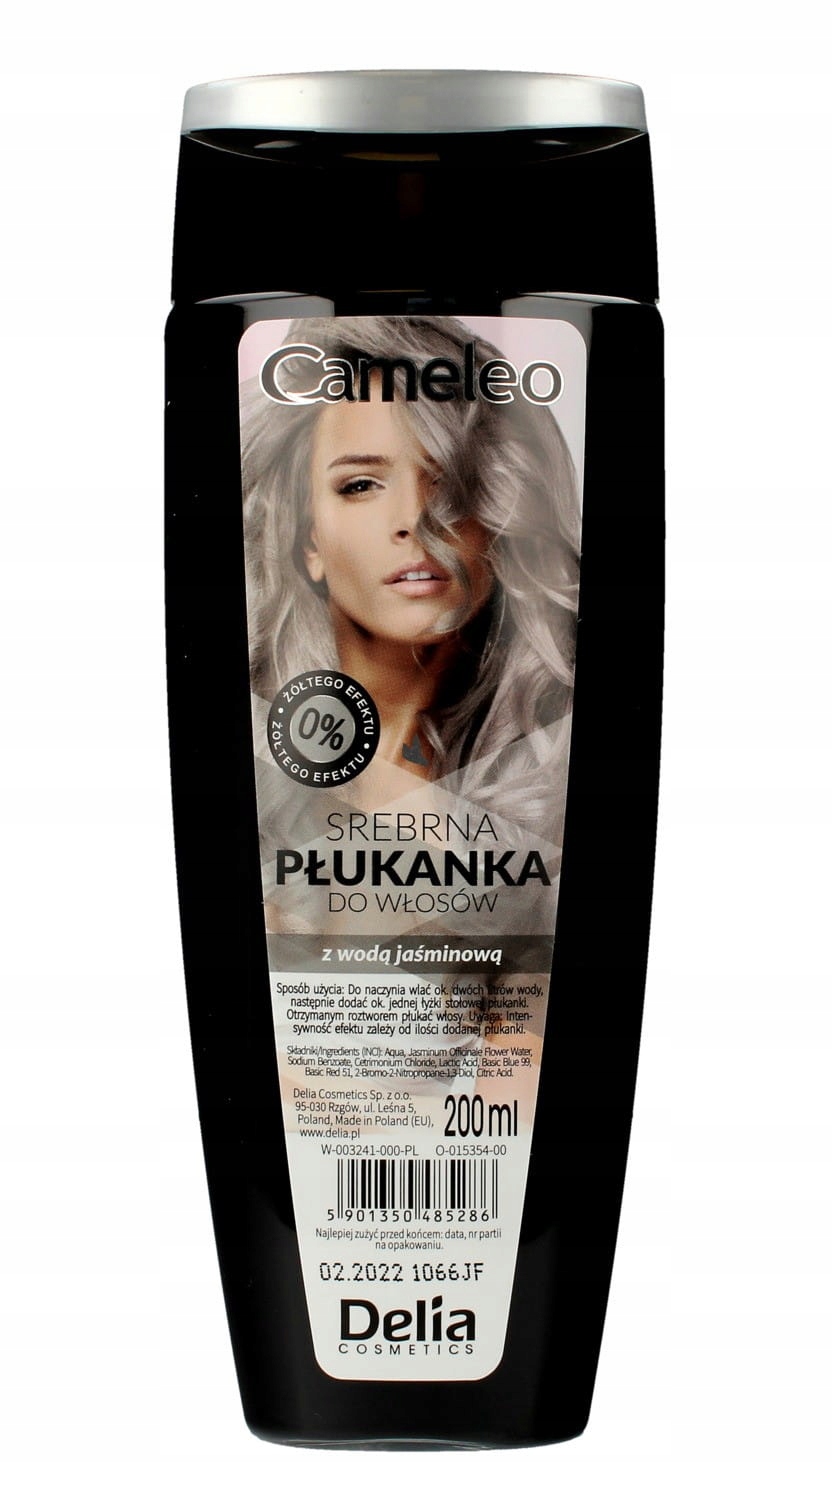 Cameleo оттеночный ополаскиватель. Delia Cameleo hair Coloring Shampoo 4.0. Delia Cosmetics Cameleo. Cameleo для волос.